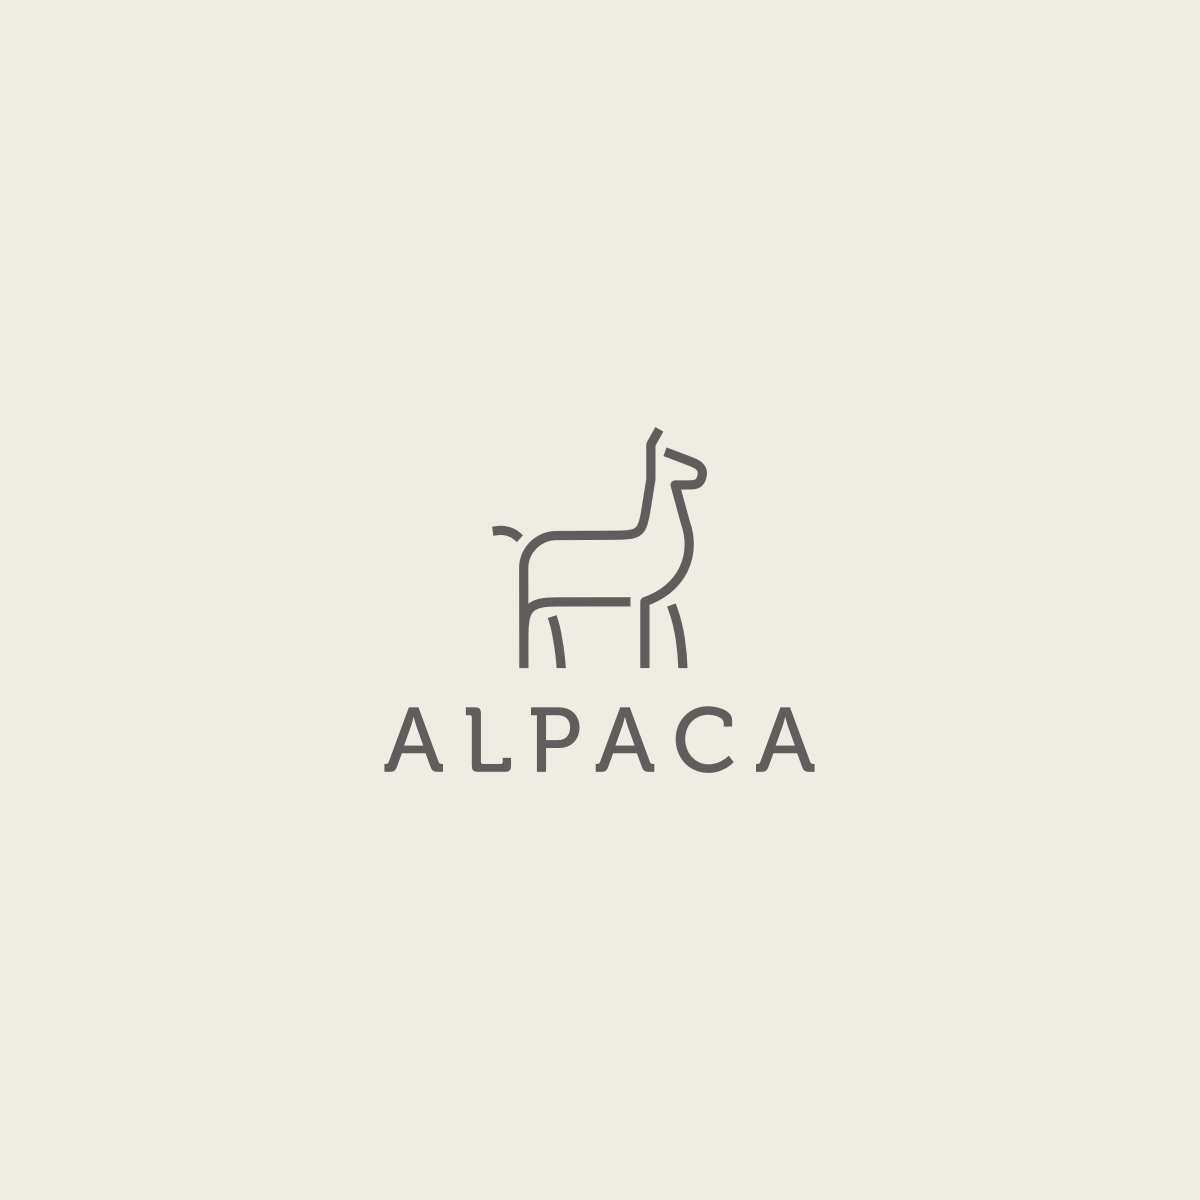 Portfolio Alpaca logo for sale